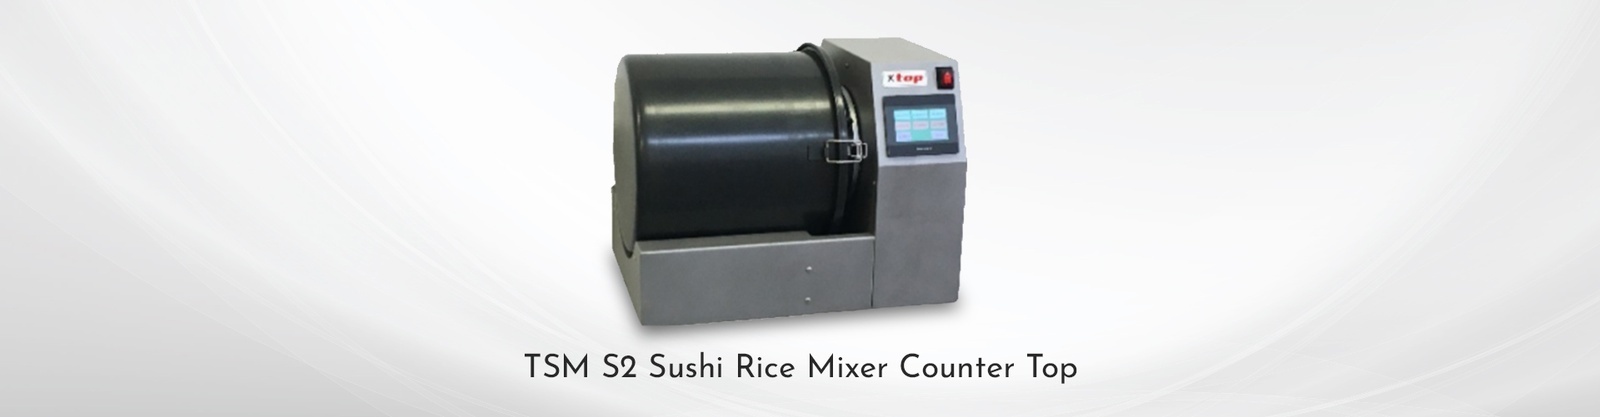 TSM S2 Sushi Rice Mixer Counter Top